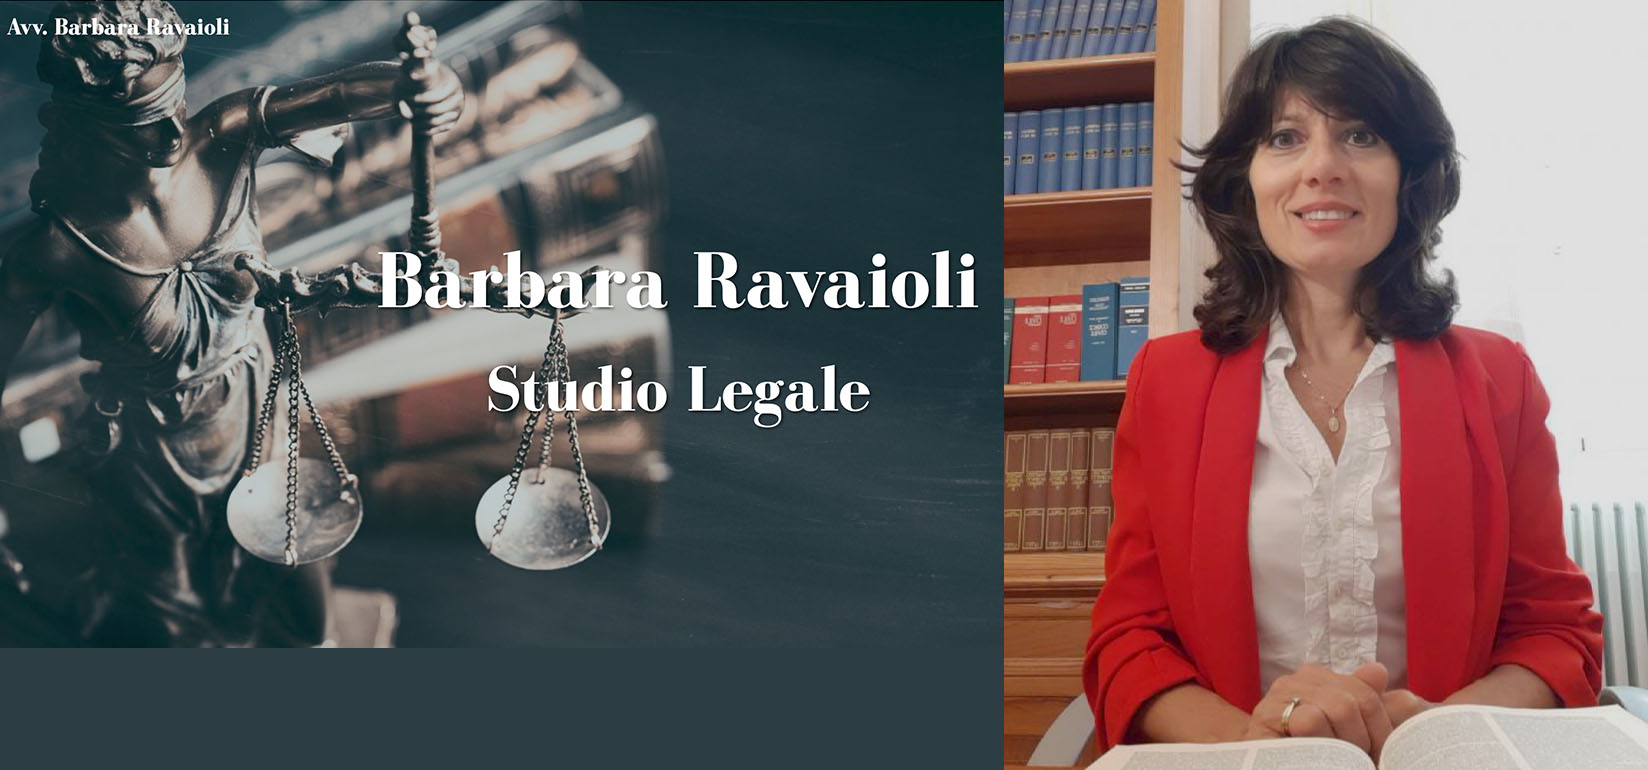 Barbara Ravaioli Studio Legale